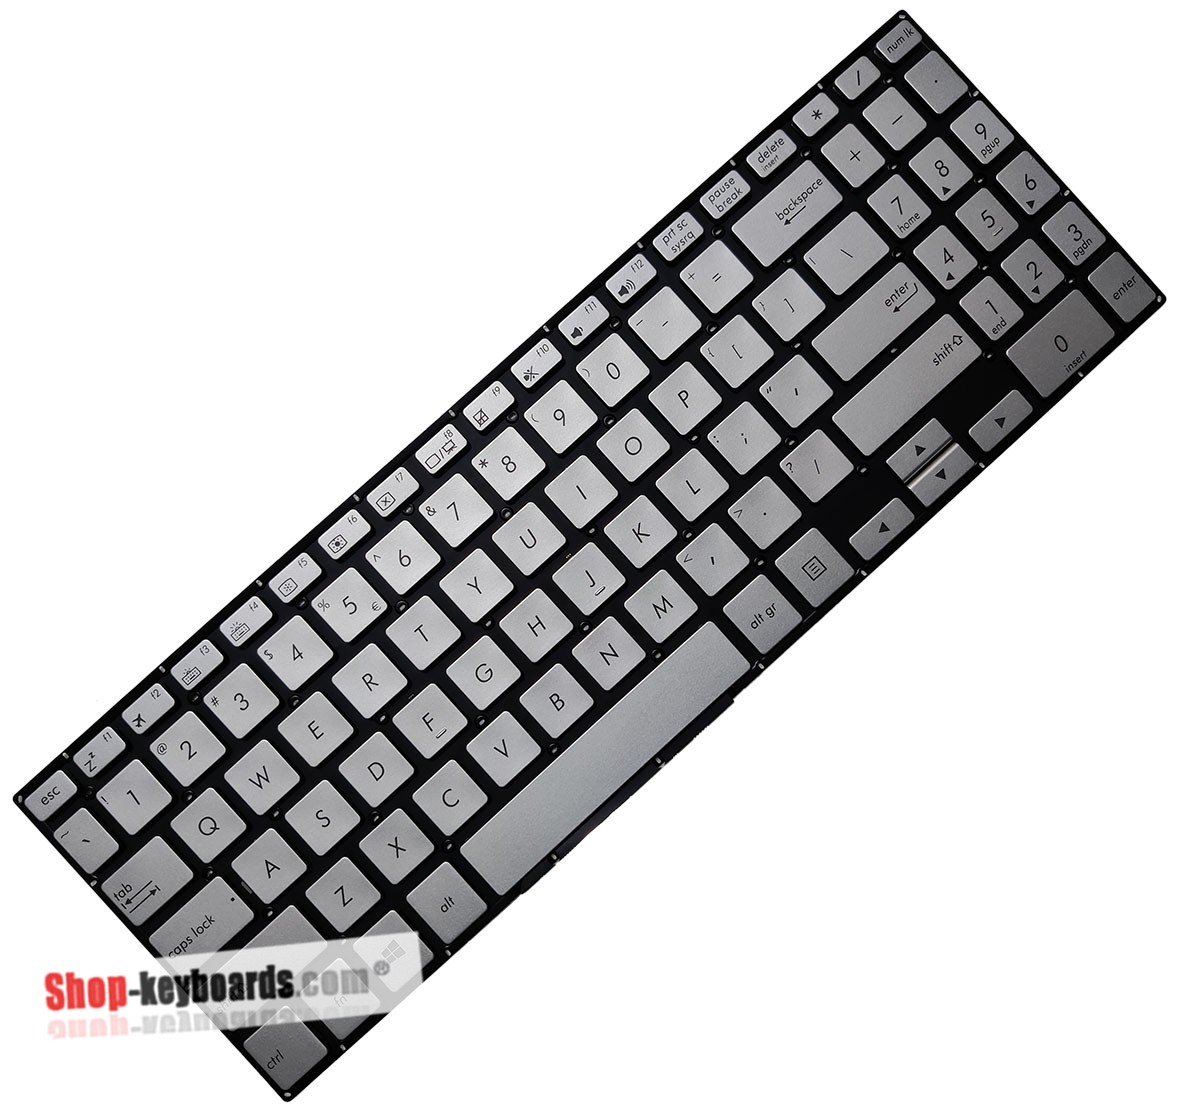 Asus AEBKKY00030  Keyboard replacement